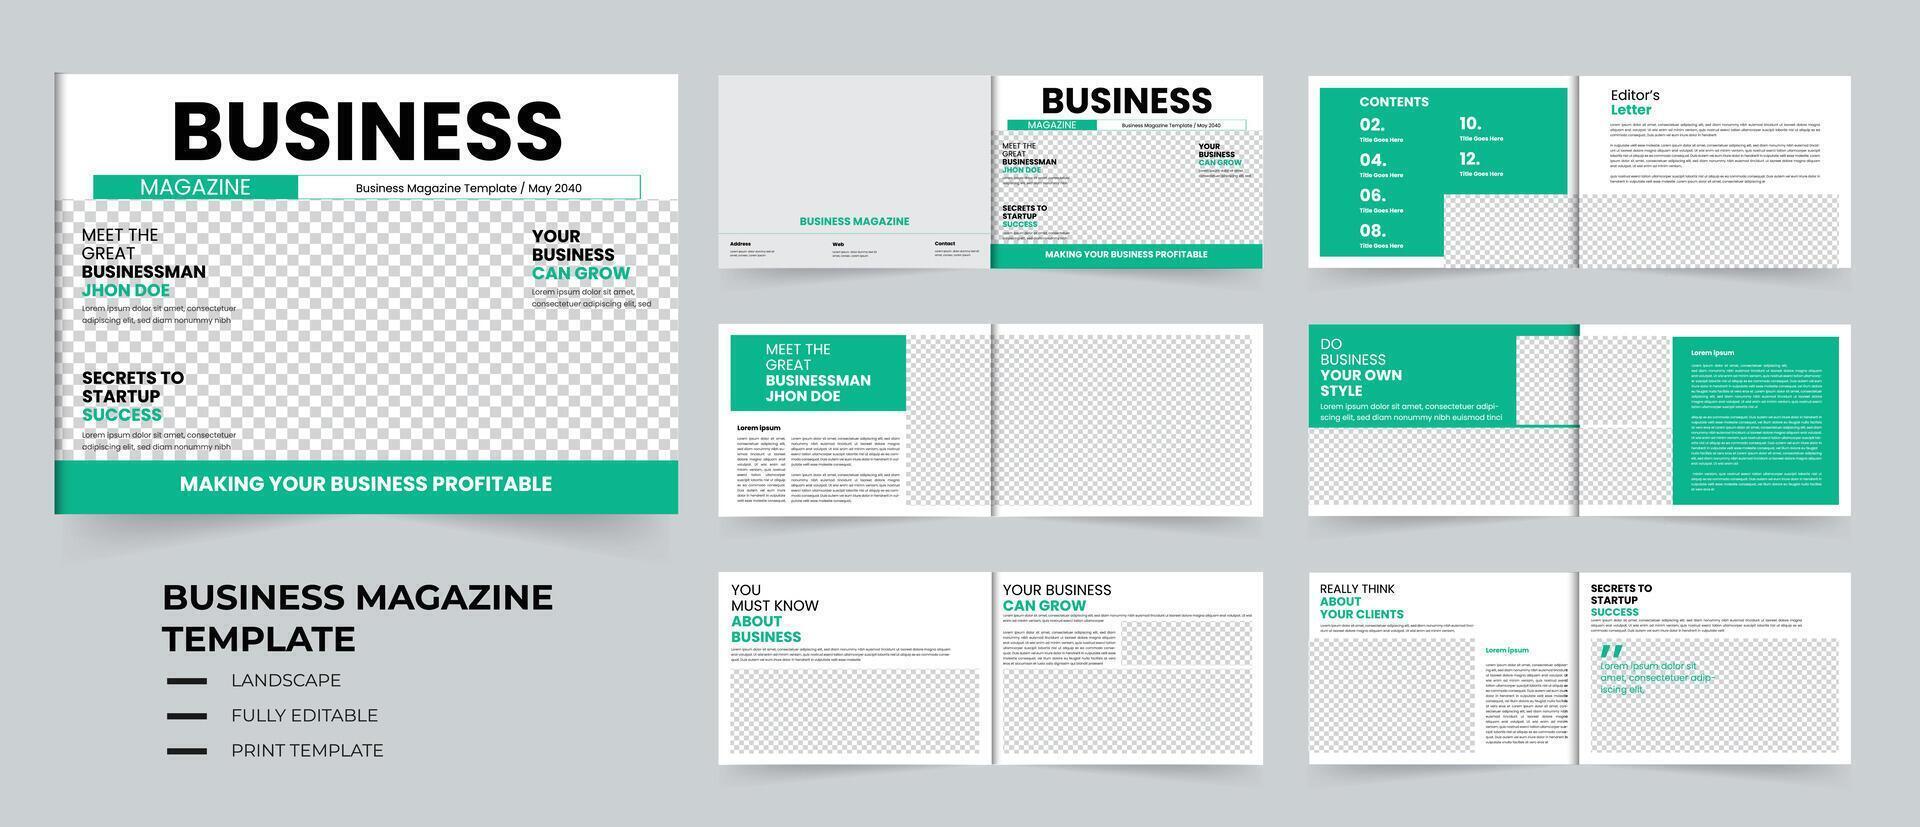 Magazine template layout design or corporate business magazine design vector